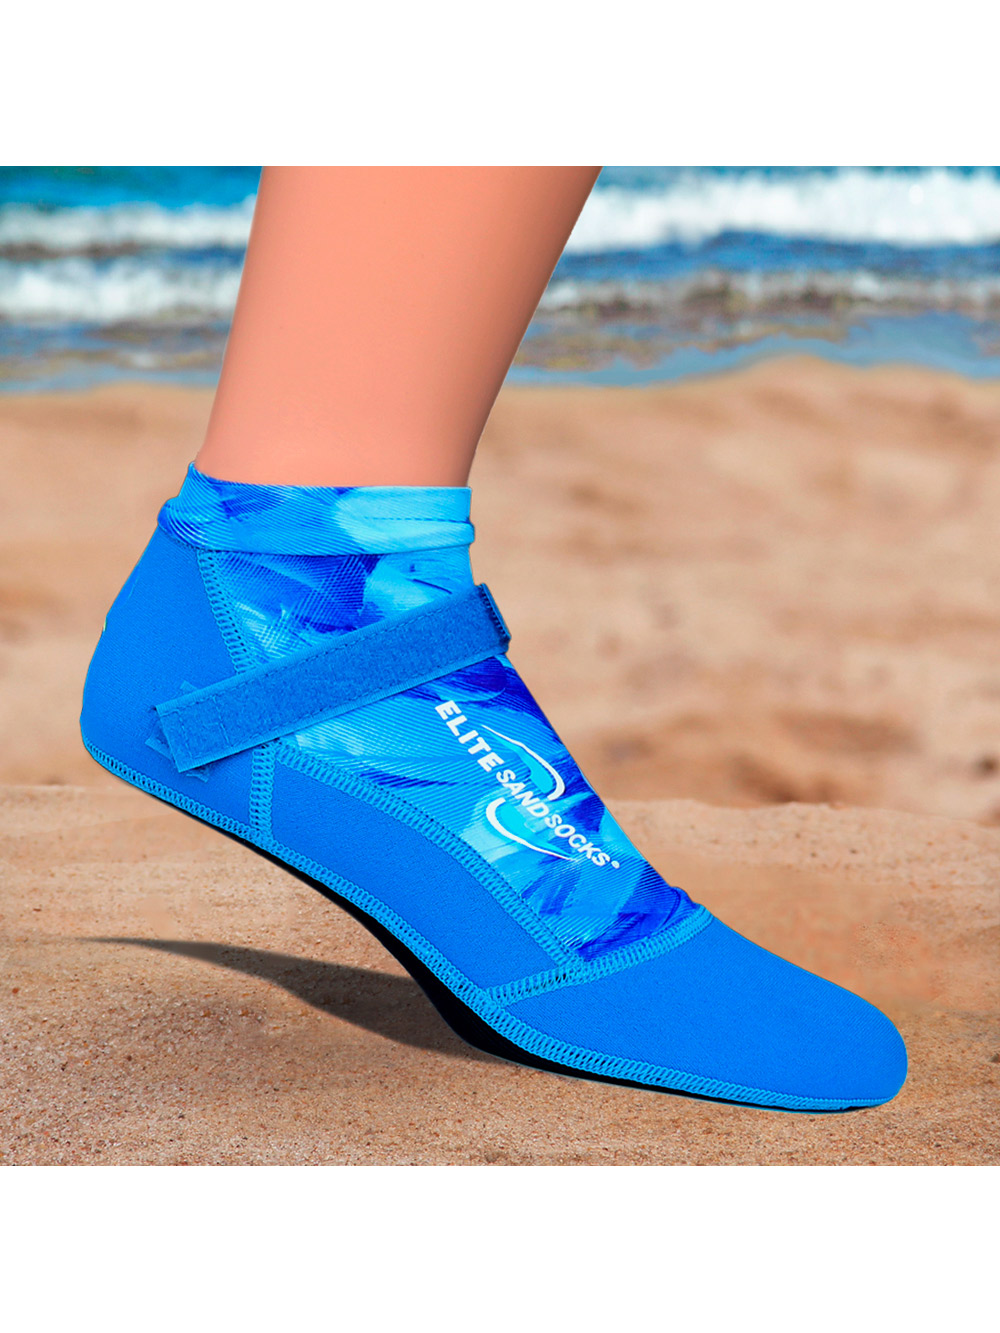 Sand Socks Original Beach Socks from Bora Sportswear Volleyball Socks for Beach And Water Neoprene Socks